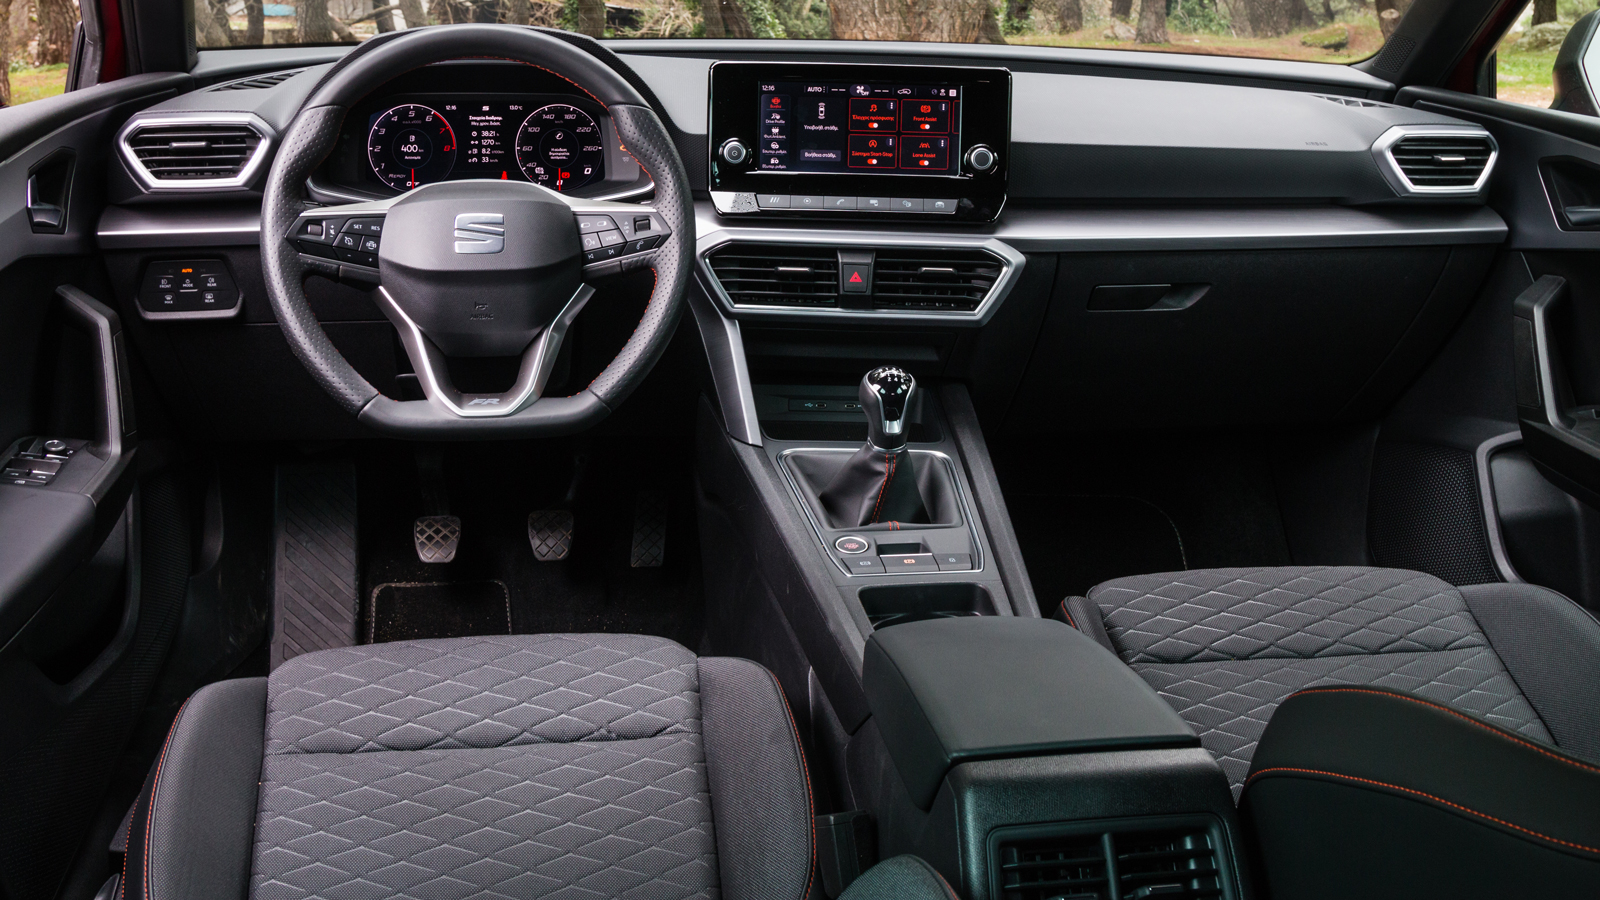 Seat Leon VS VW Golf: Ίδιος όμιλος, ίδια μοτέρ. Ποιο είναι καλύτερο;